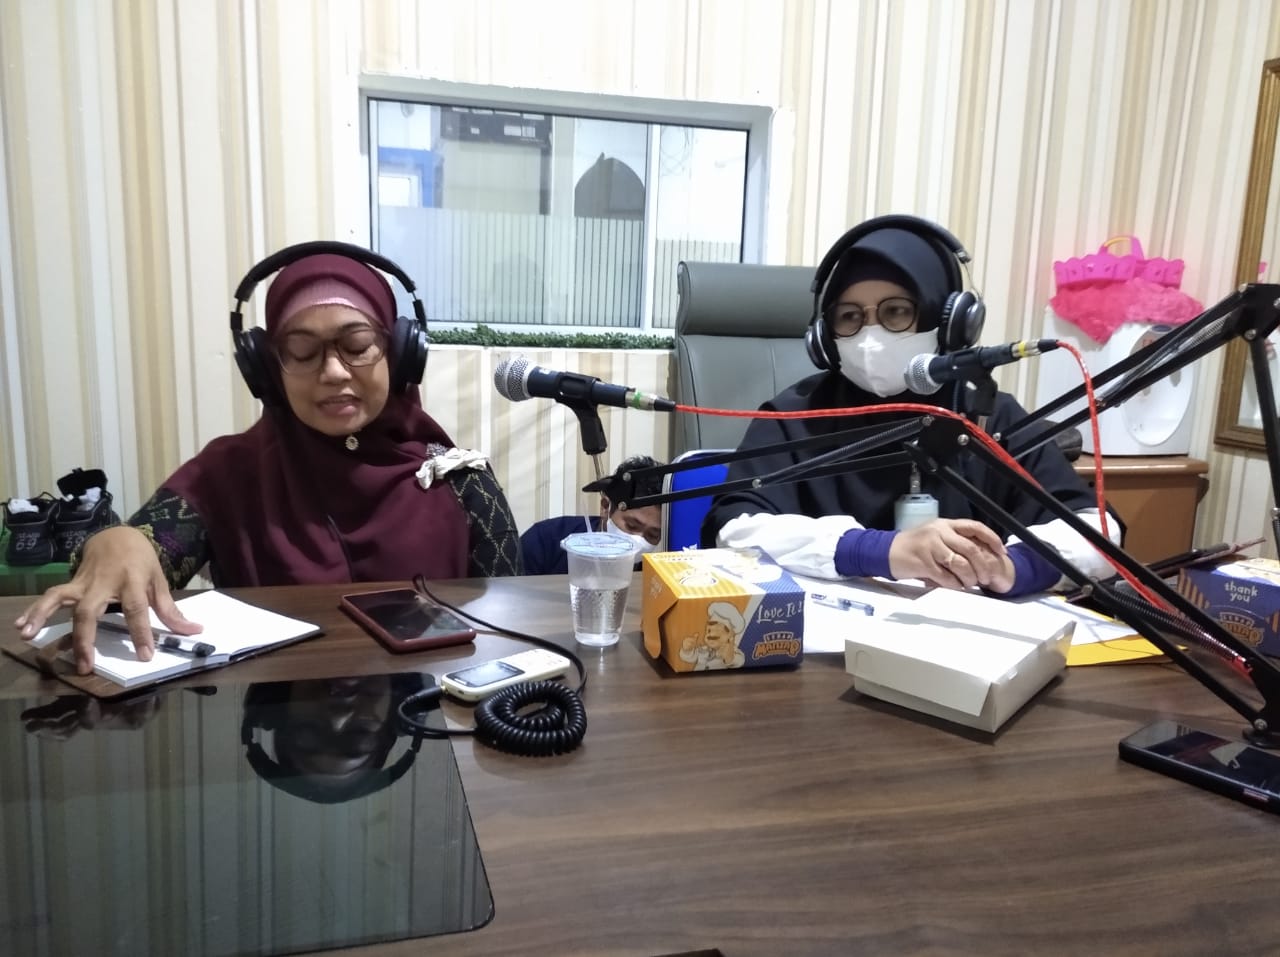 RSUD Puri Husada Tembilahan Sosialisasikan Bahaya Tuberclosis